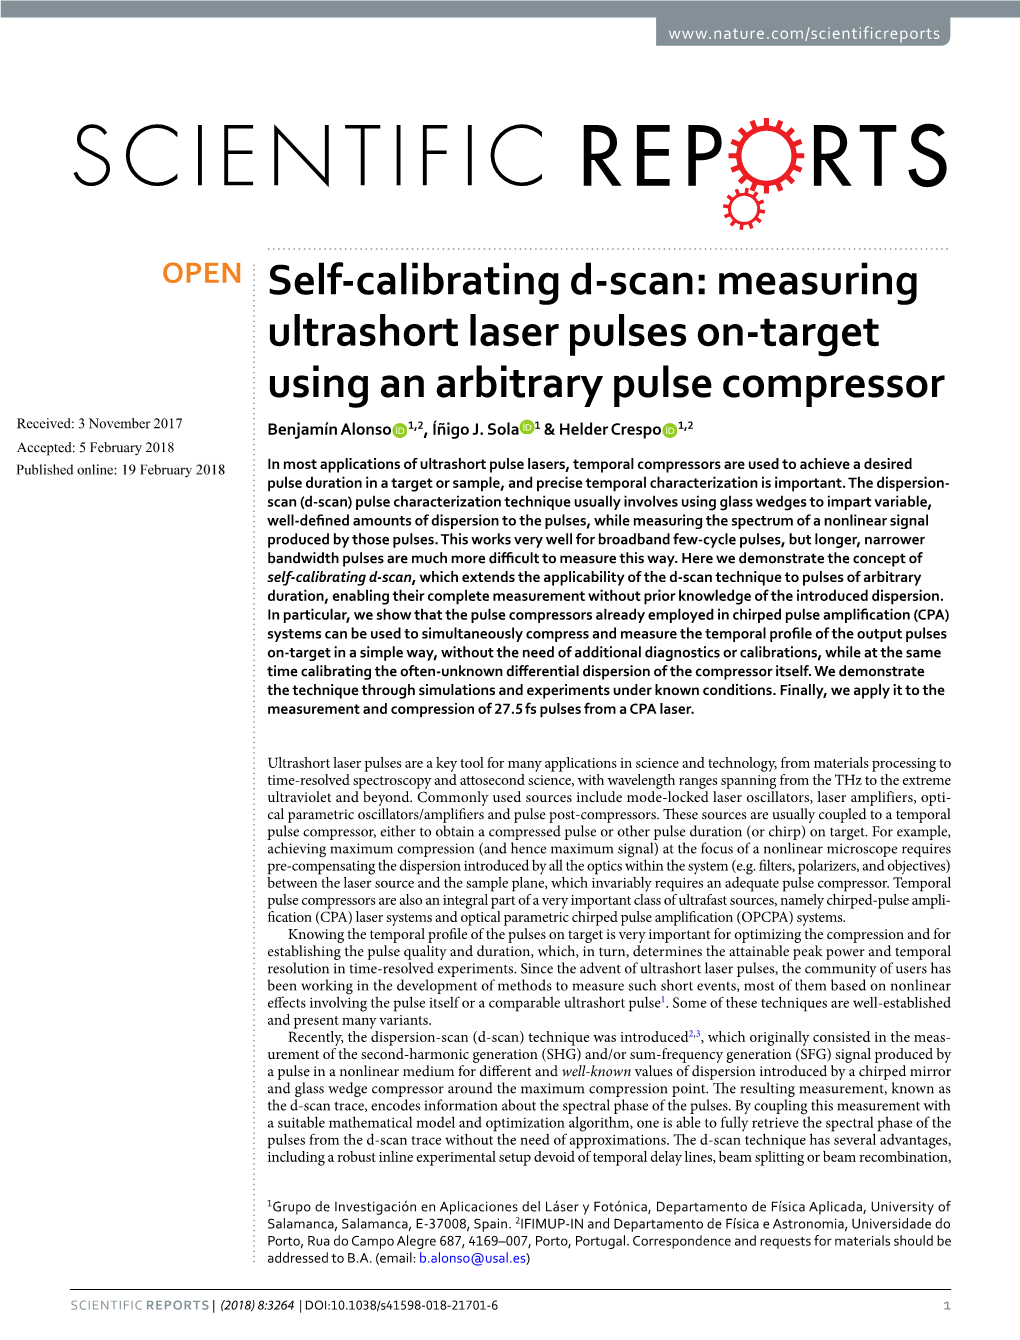 Self-Calibrating D-Scan: Measuring Ultrashort Laser Pulses On-Target Using an Arbitrary Pulse Compressor Received: 3 November 2017 Benjamín Alonso 1,2, Íñigo J